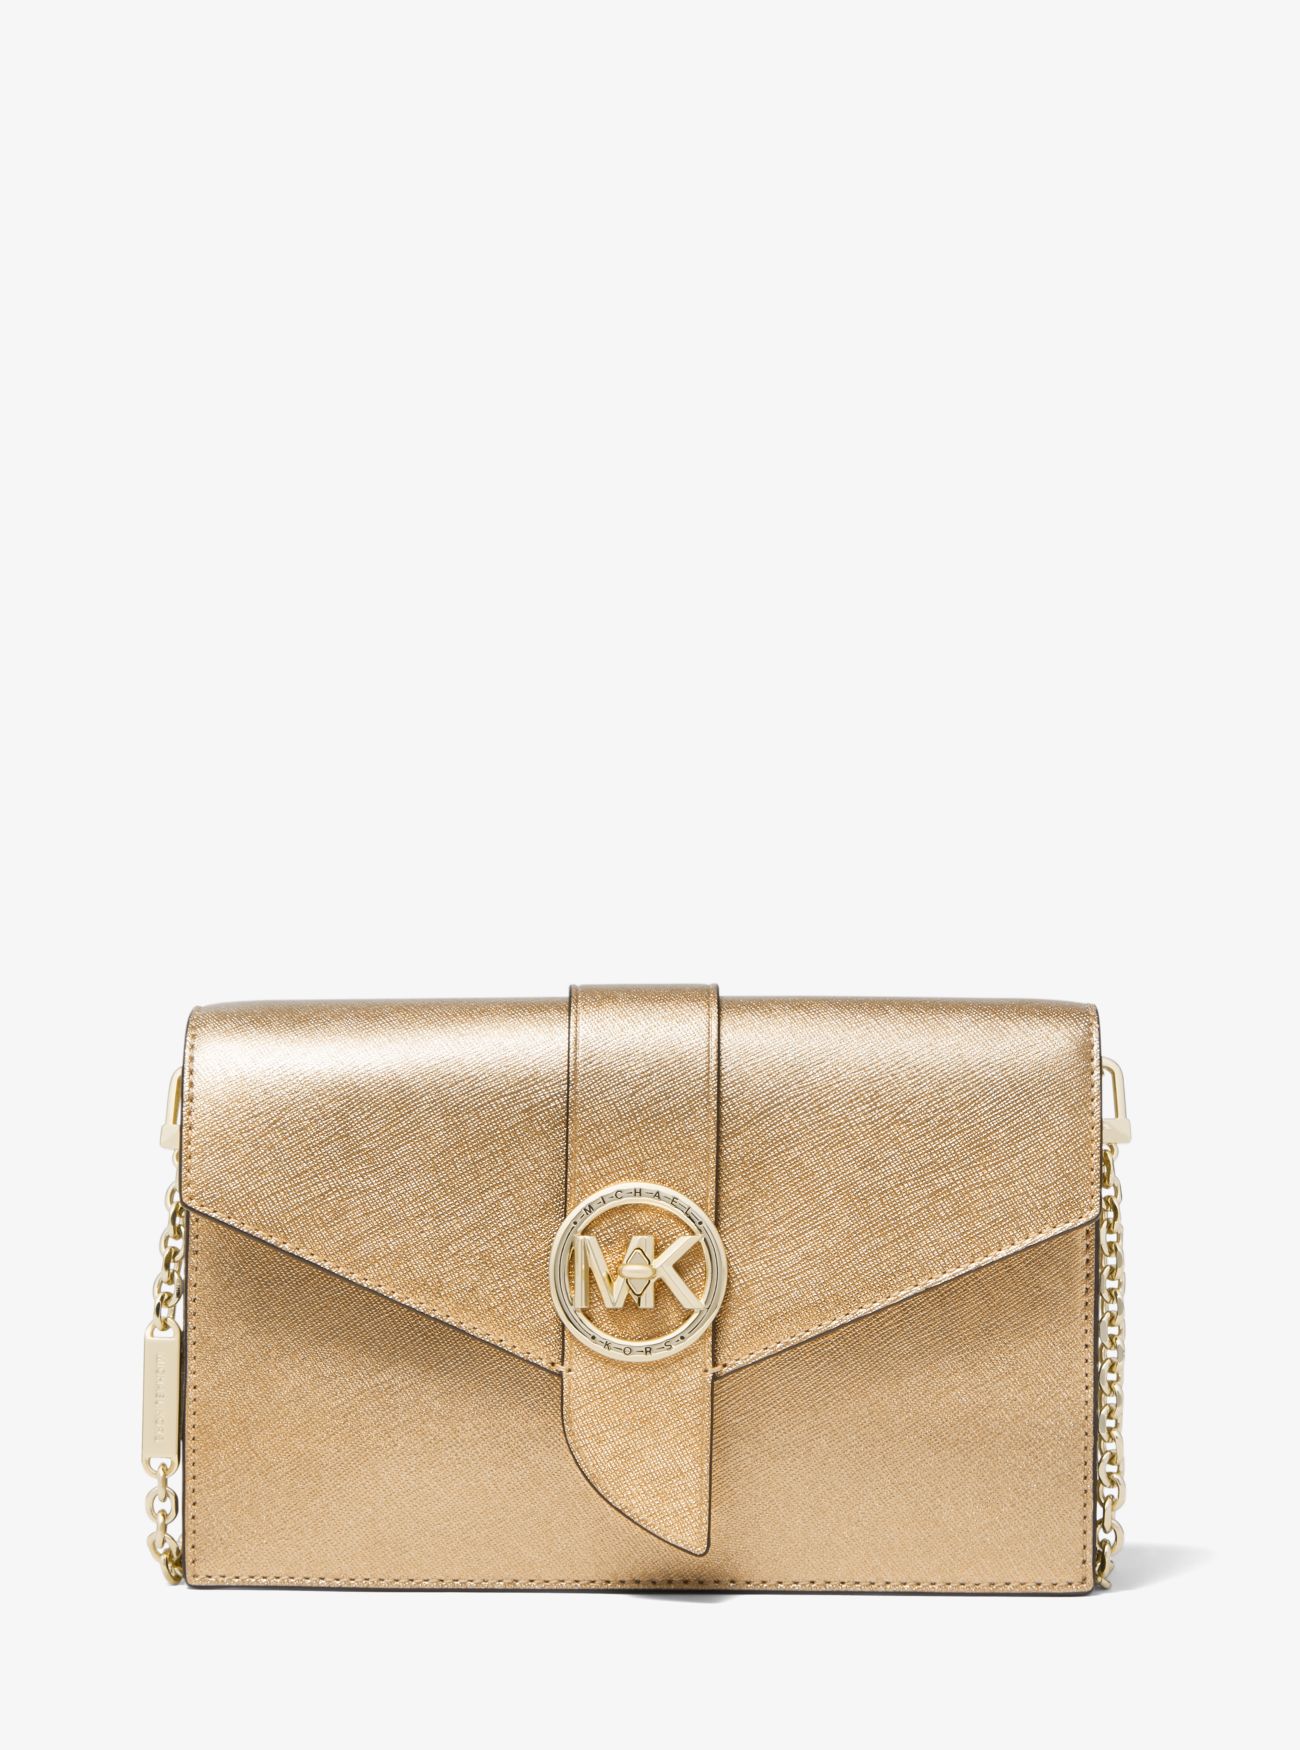 MK Medium Metallic Saffiano Leather Convertible Crossbody Bag - Pale Gold - Michael Kors